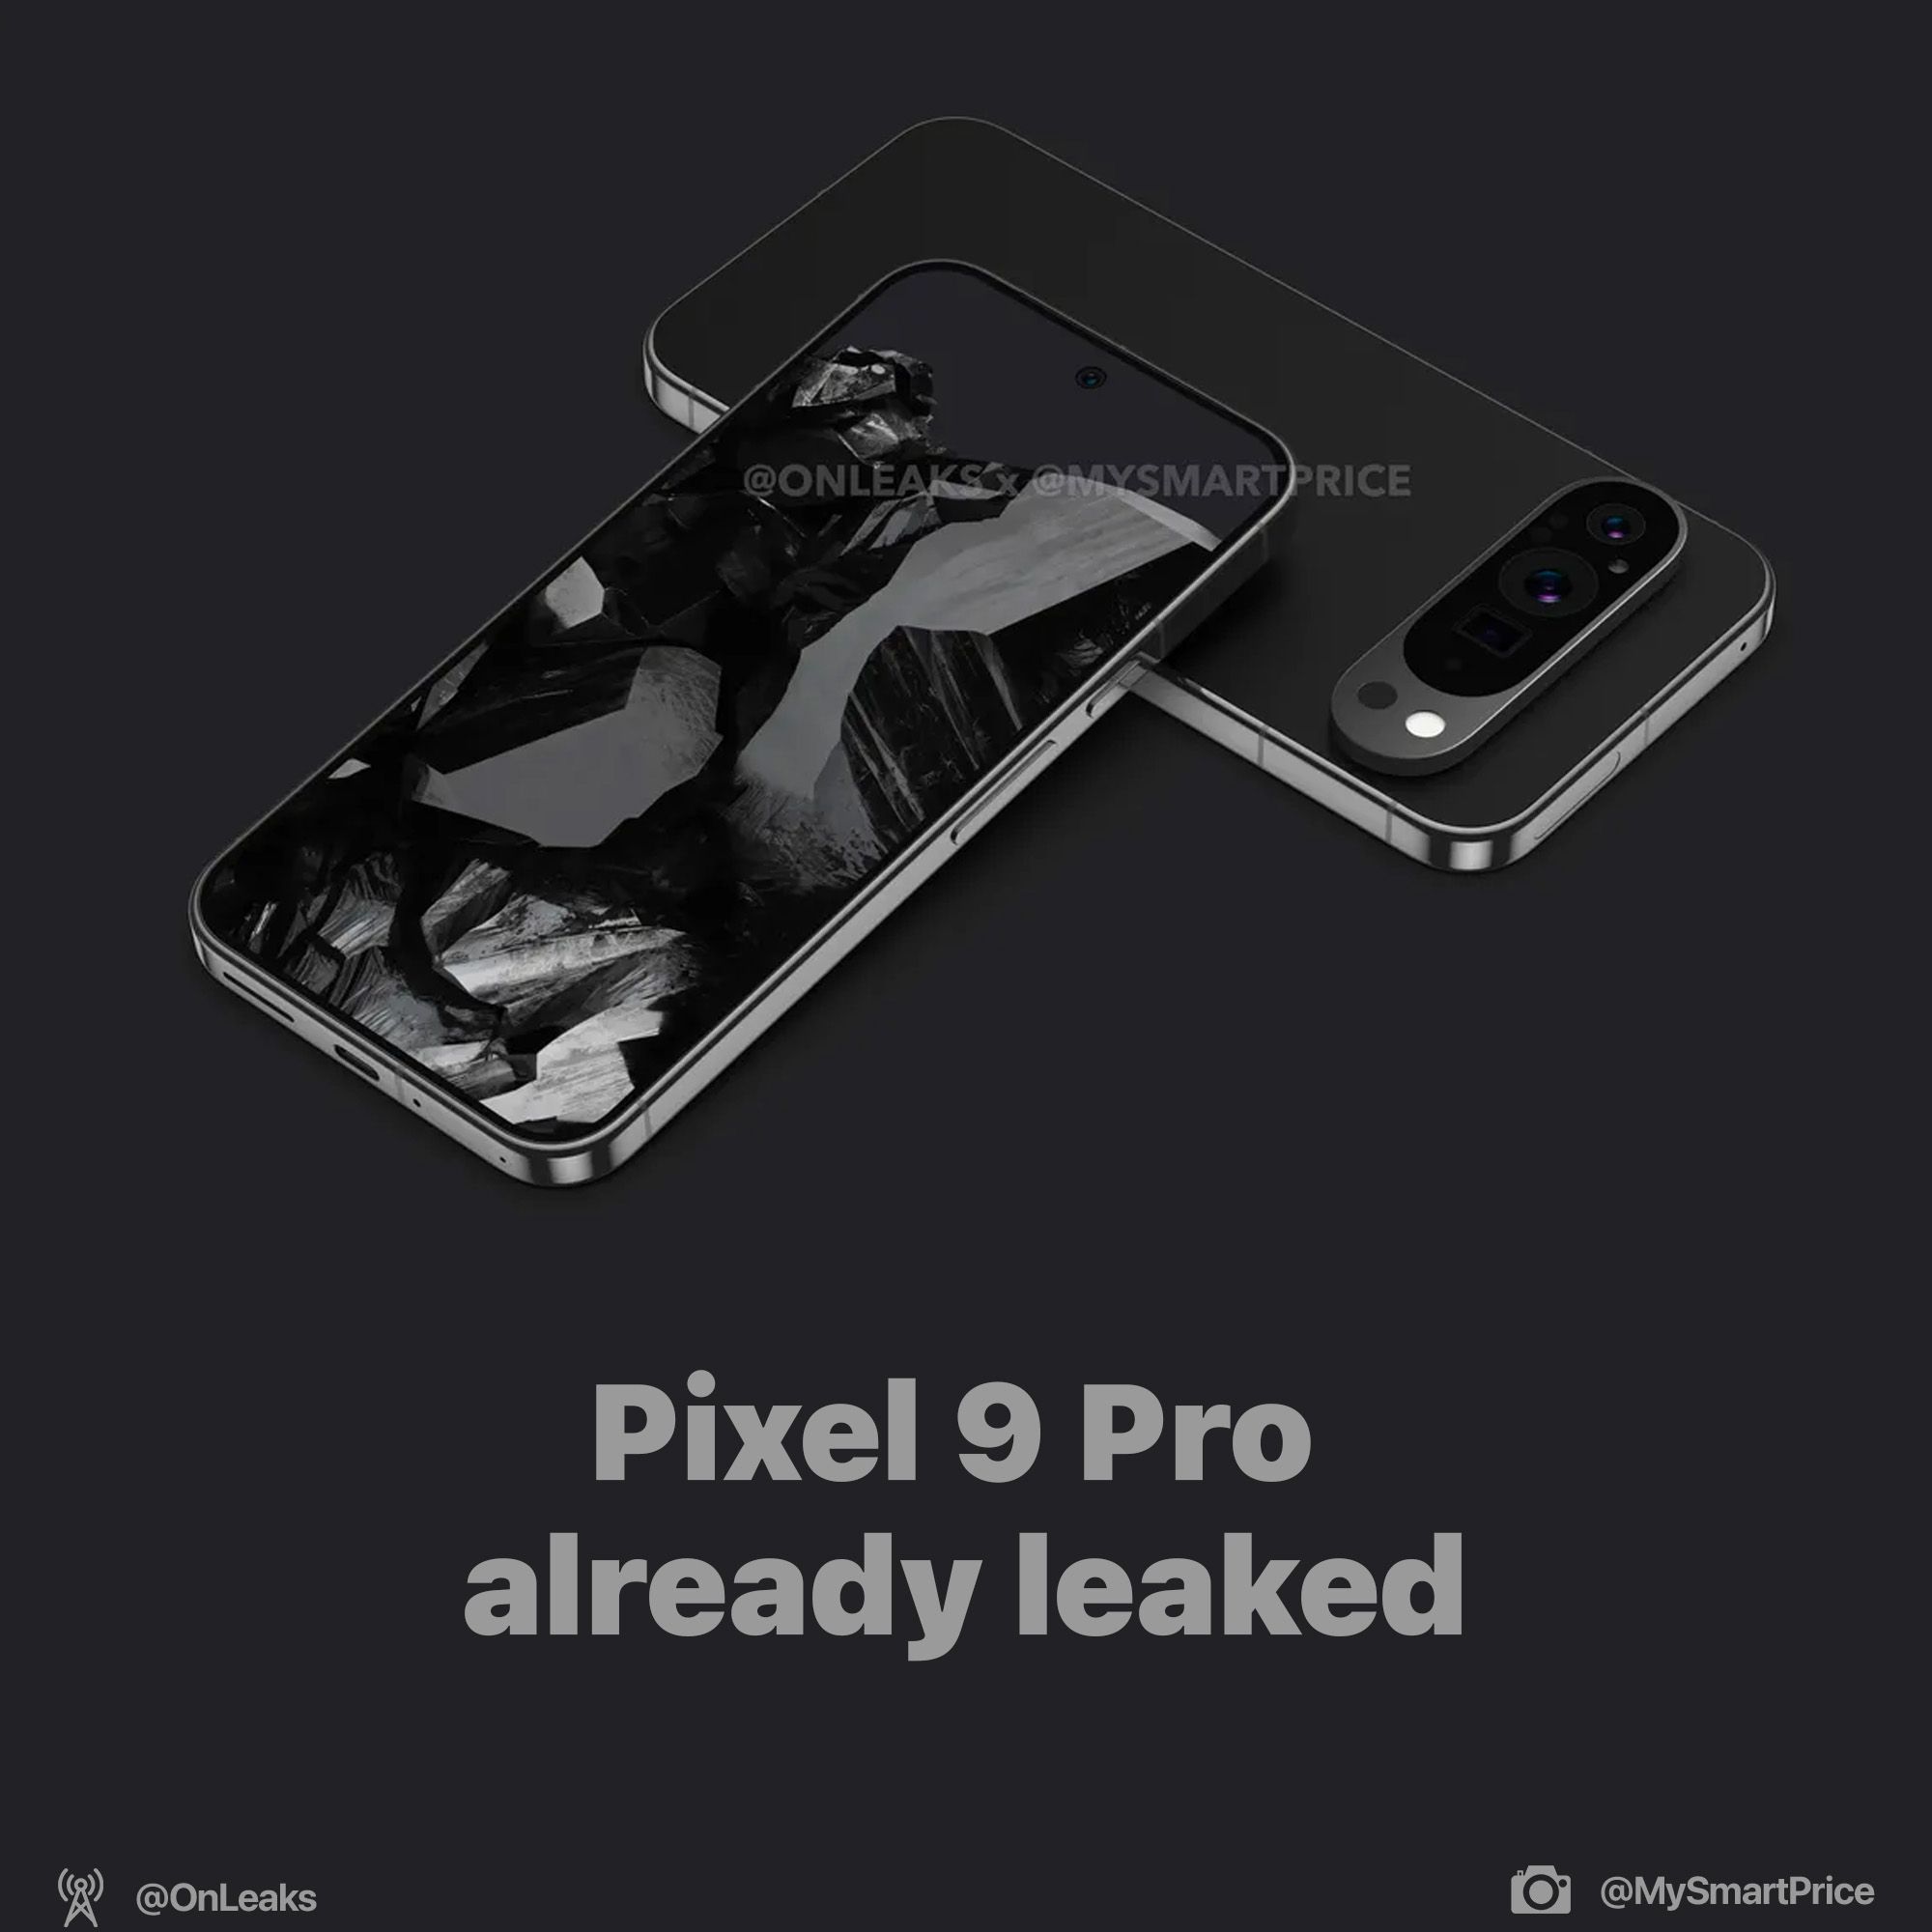 Pixel 9 Pro already leaked